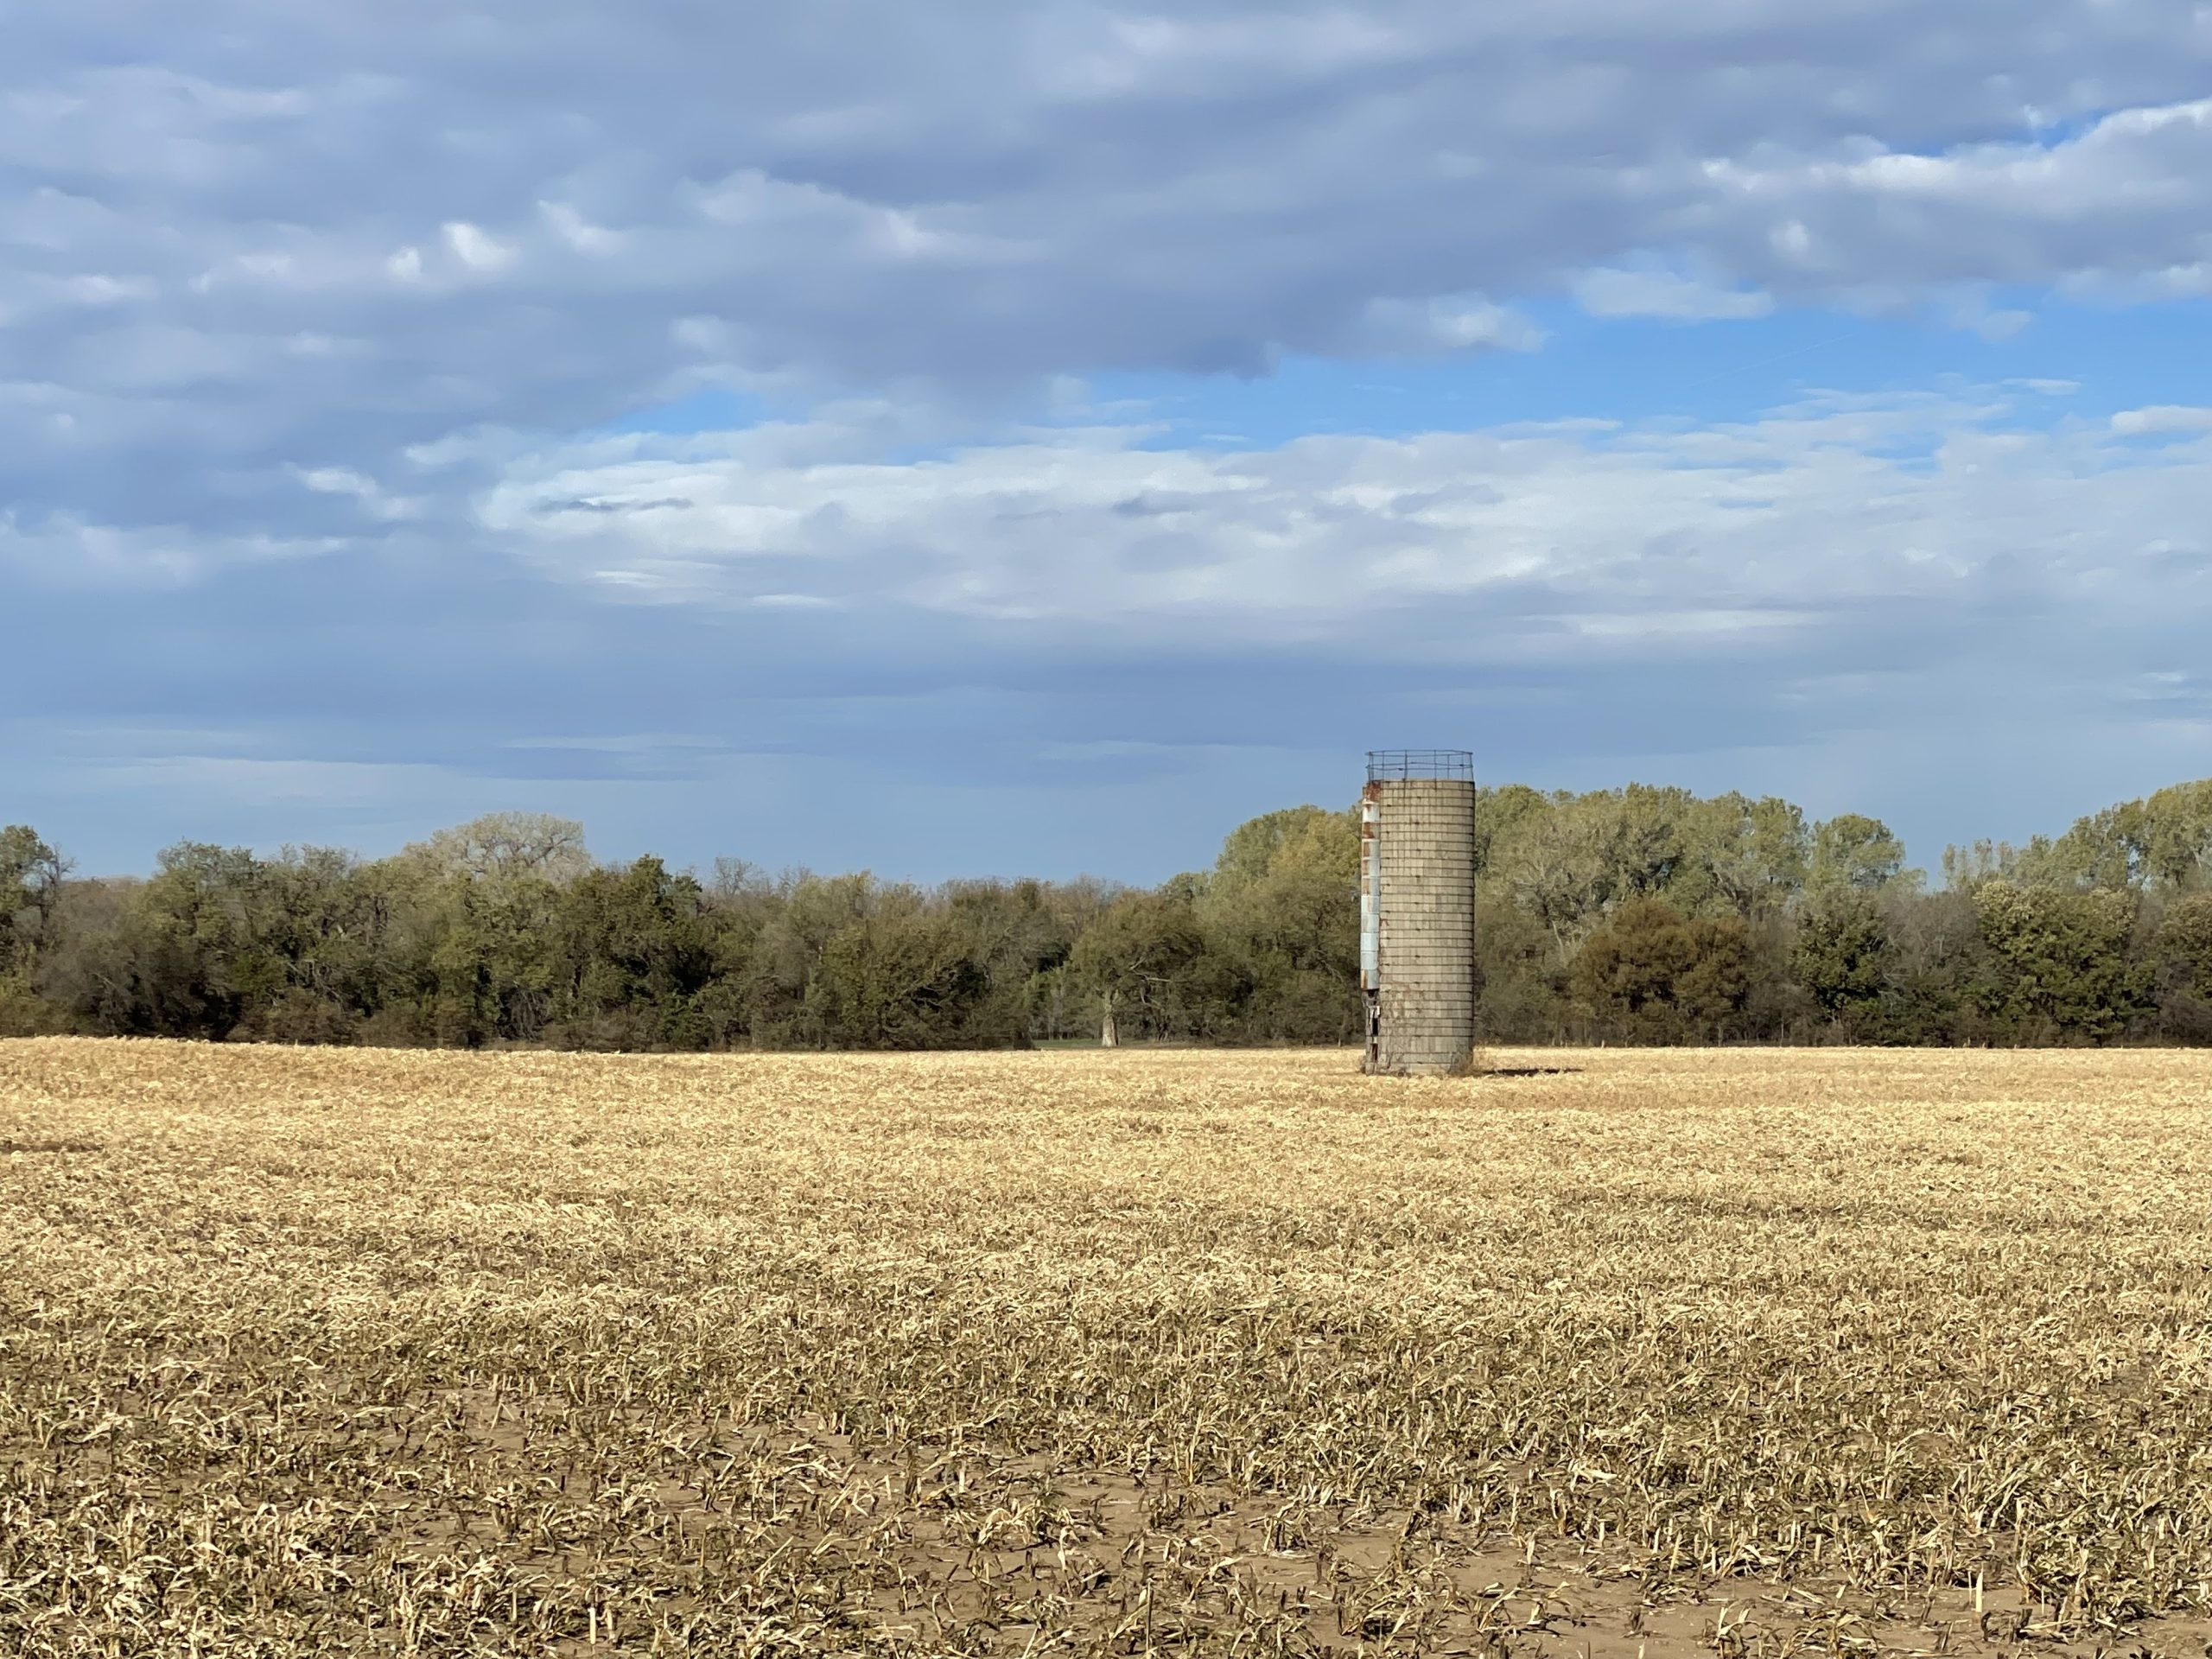 Silo in a field in daylight. (Journal photo by Jennifer Theurer.)